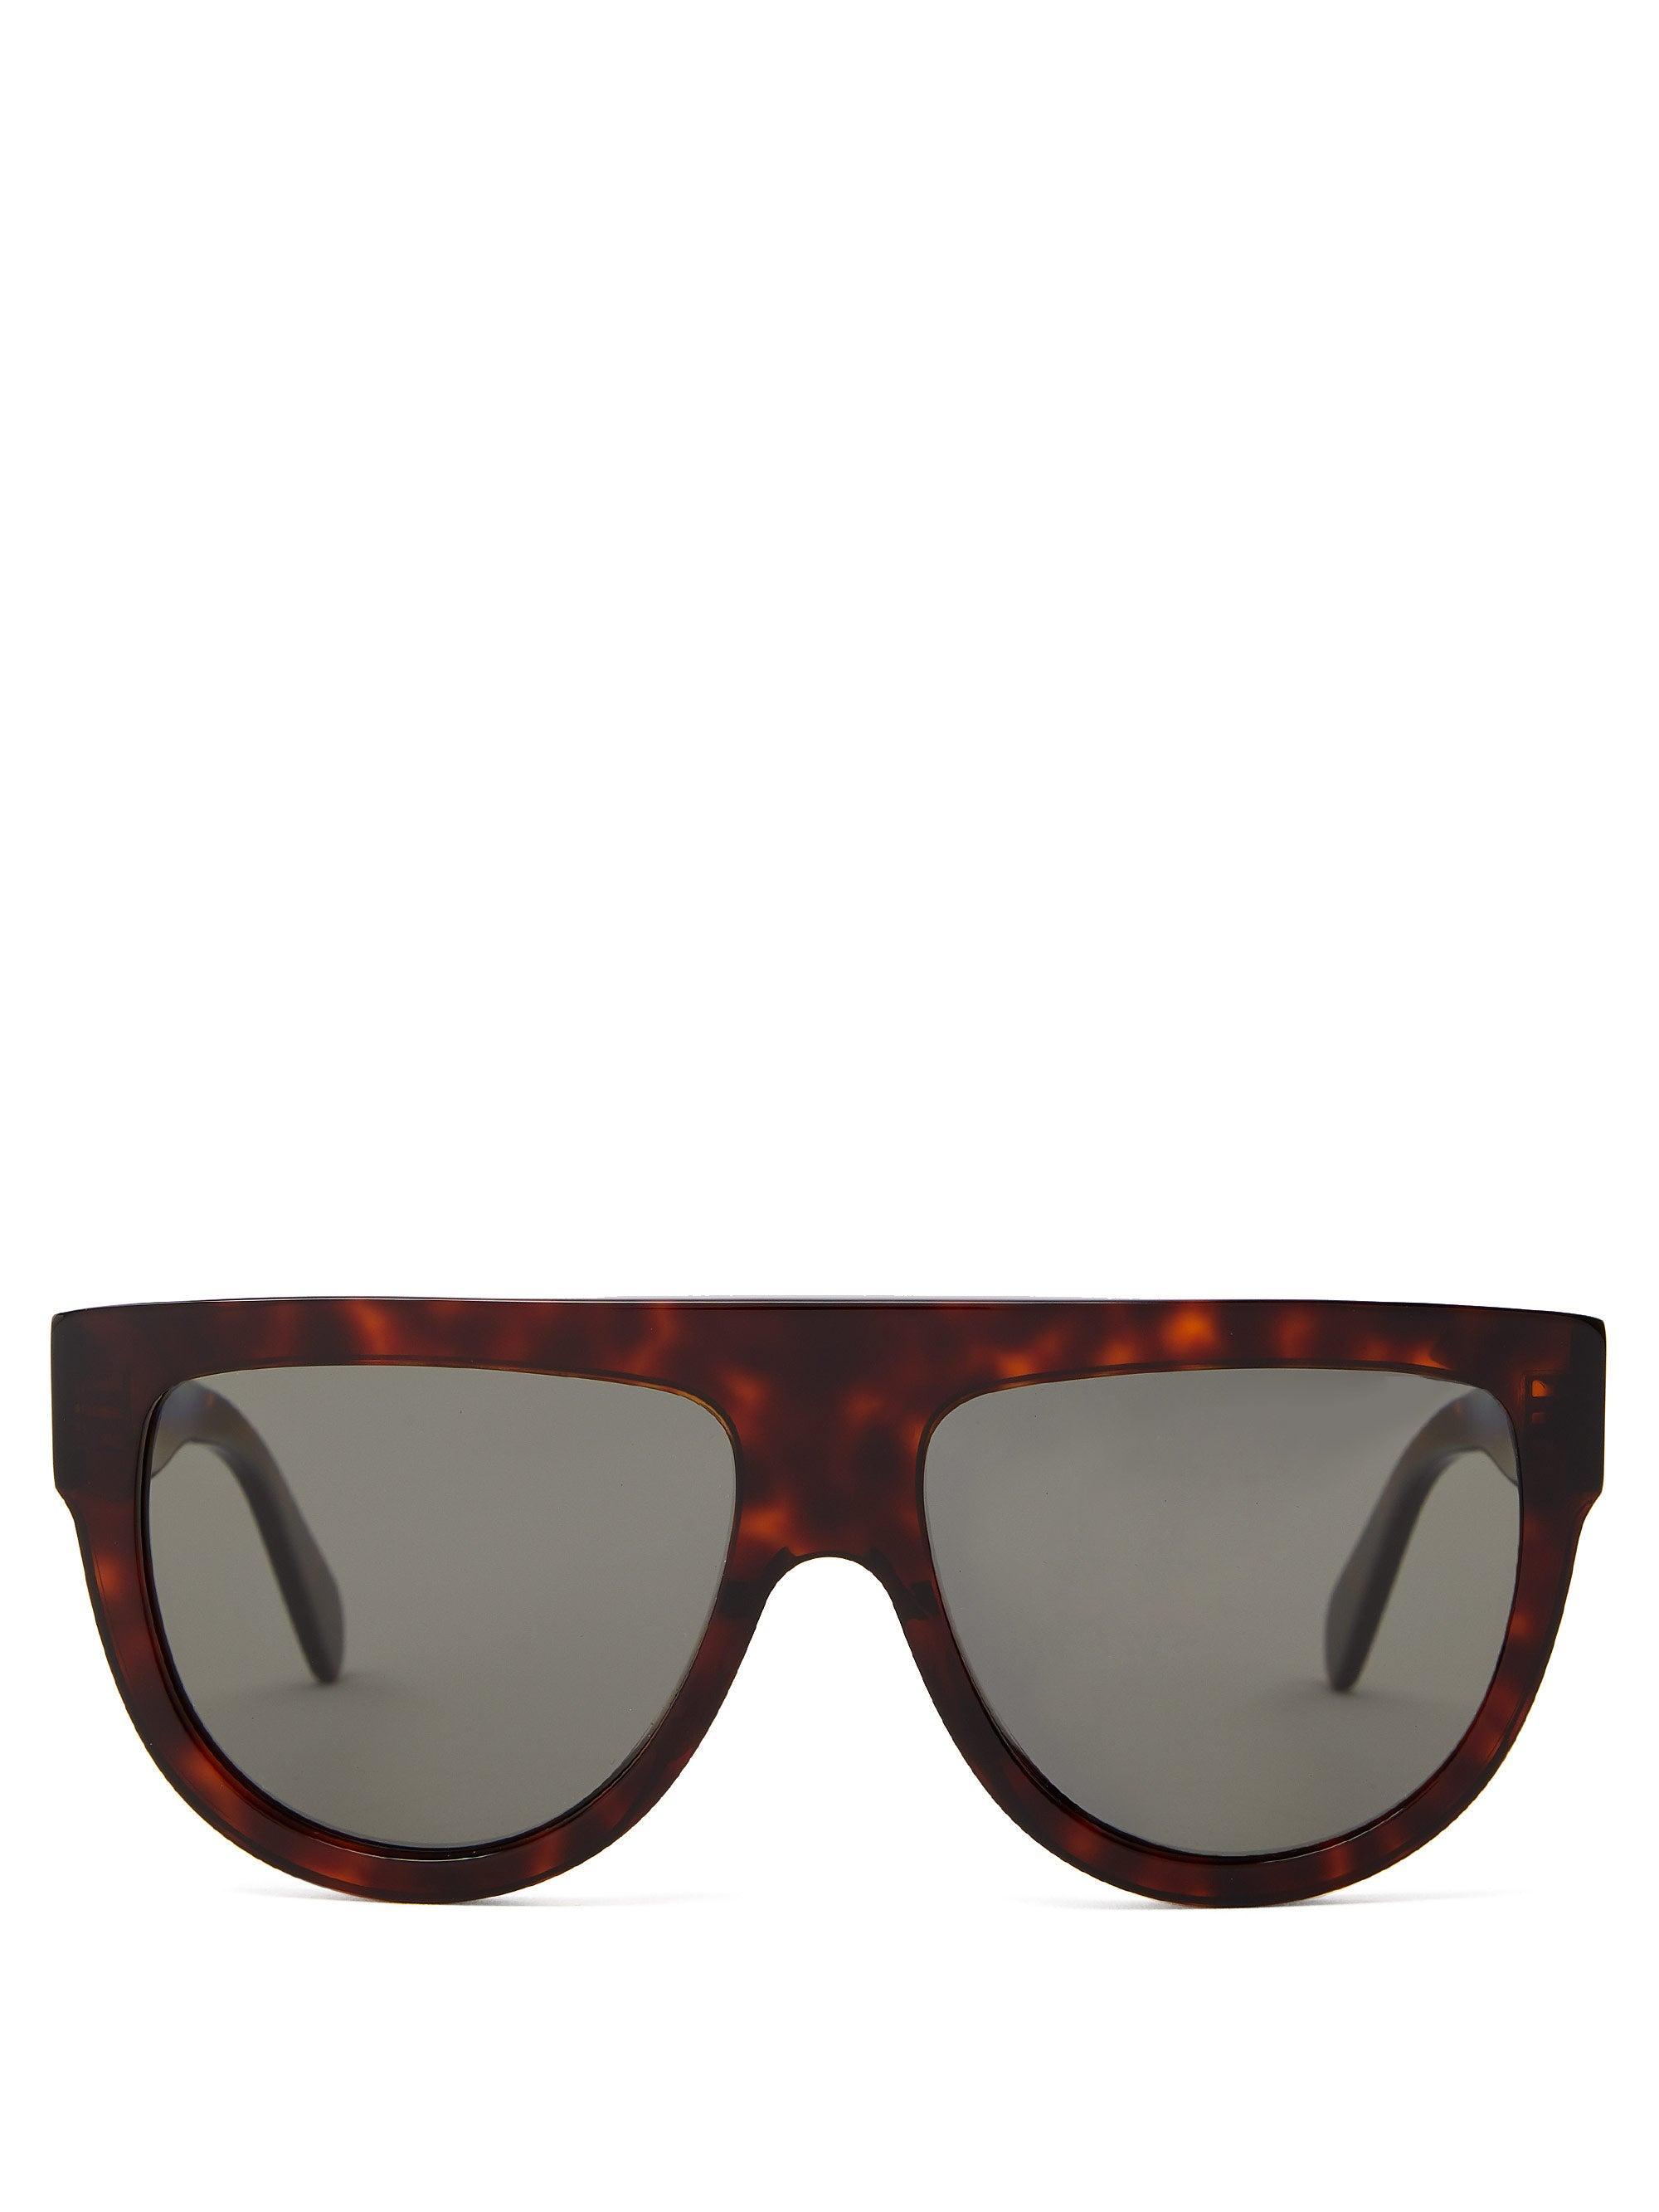 Celine Flat-top Tortoiseshell-effect Acetate Sunglasses in Brown - Lyst